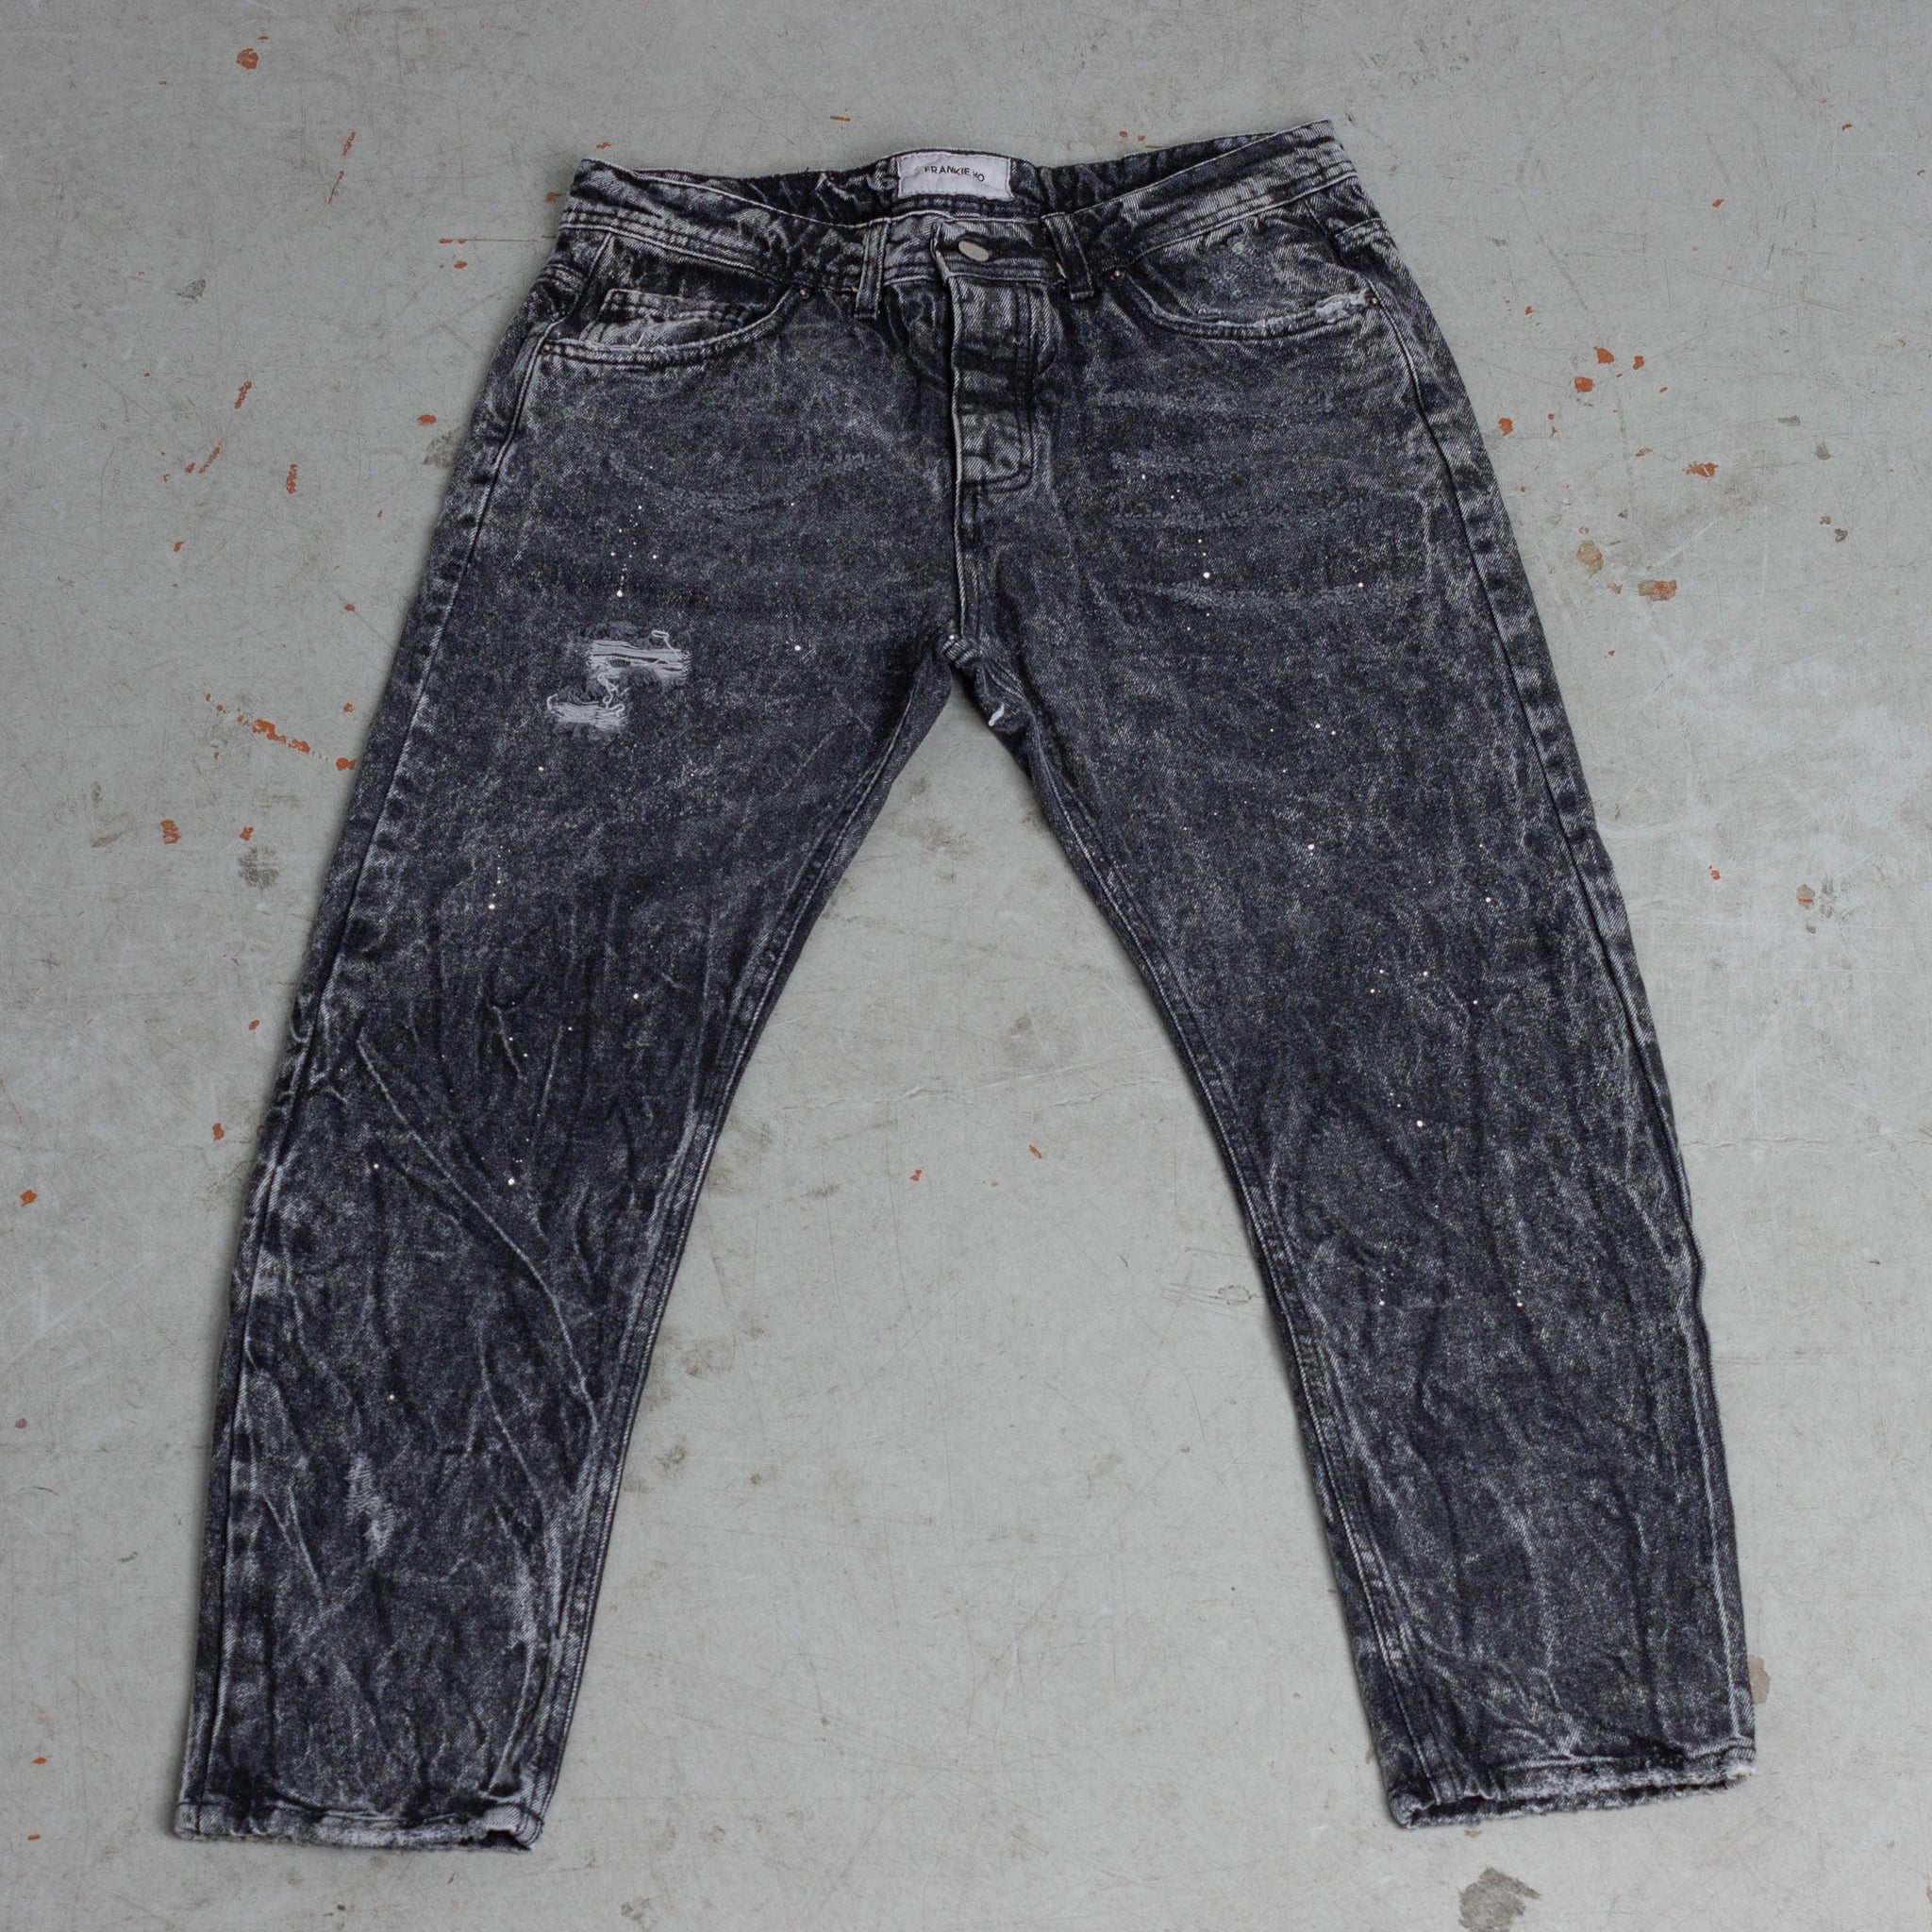 Jeans grey wave wash - FRANKIE HO